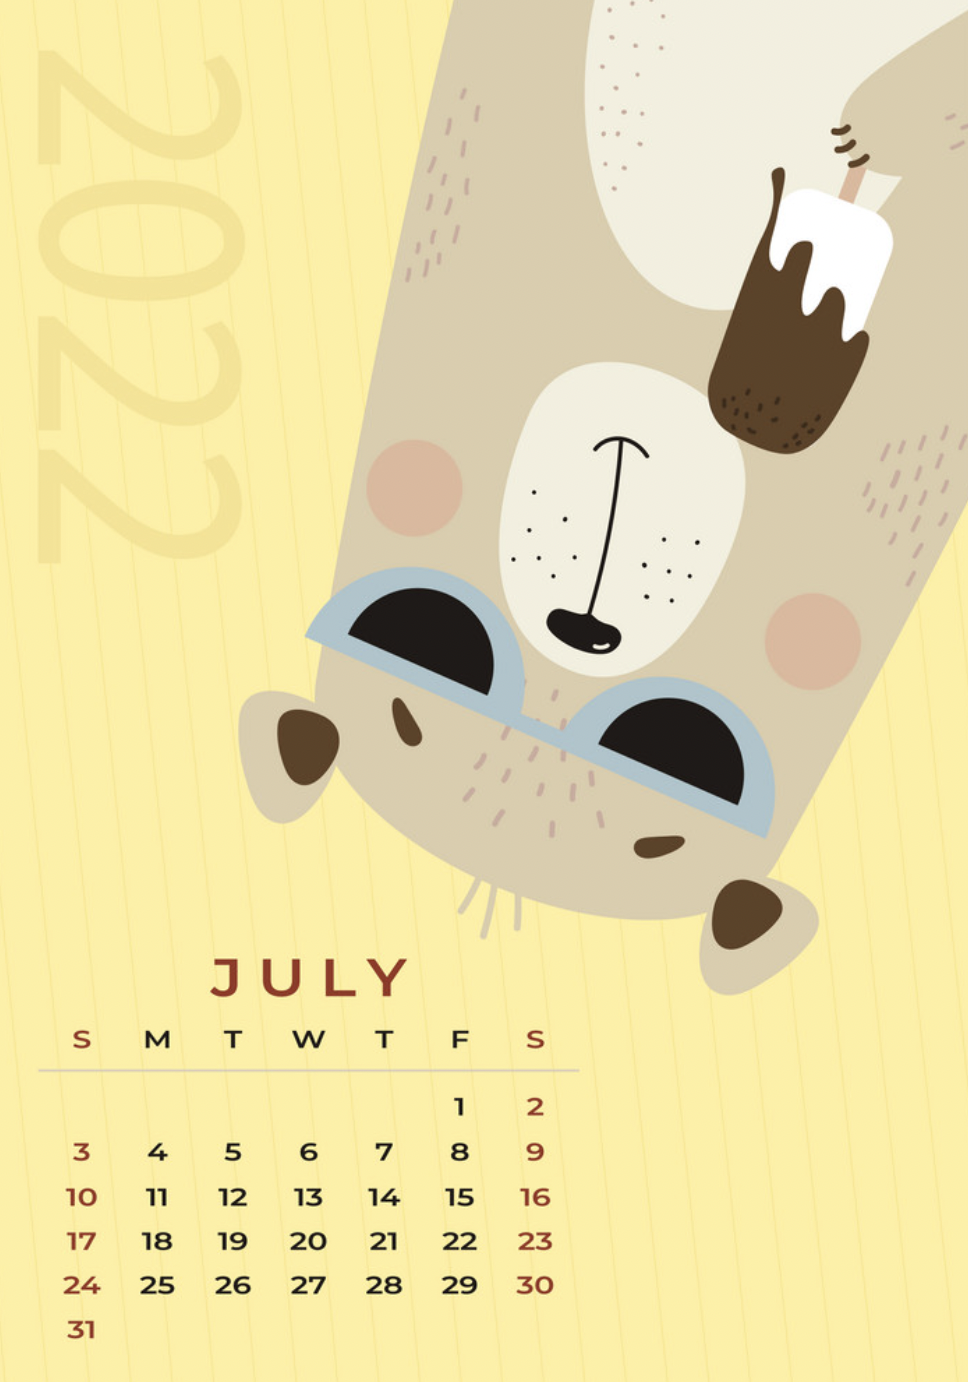 July 2022 Calendar Wallpapers  Wallpaper Cave